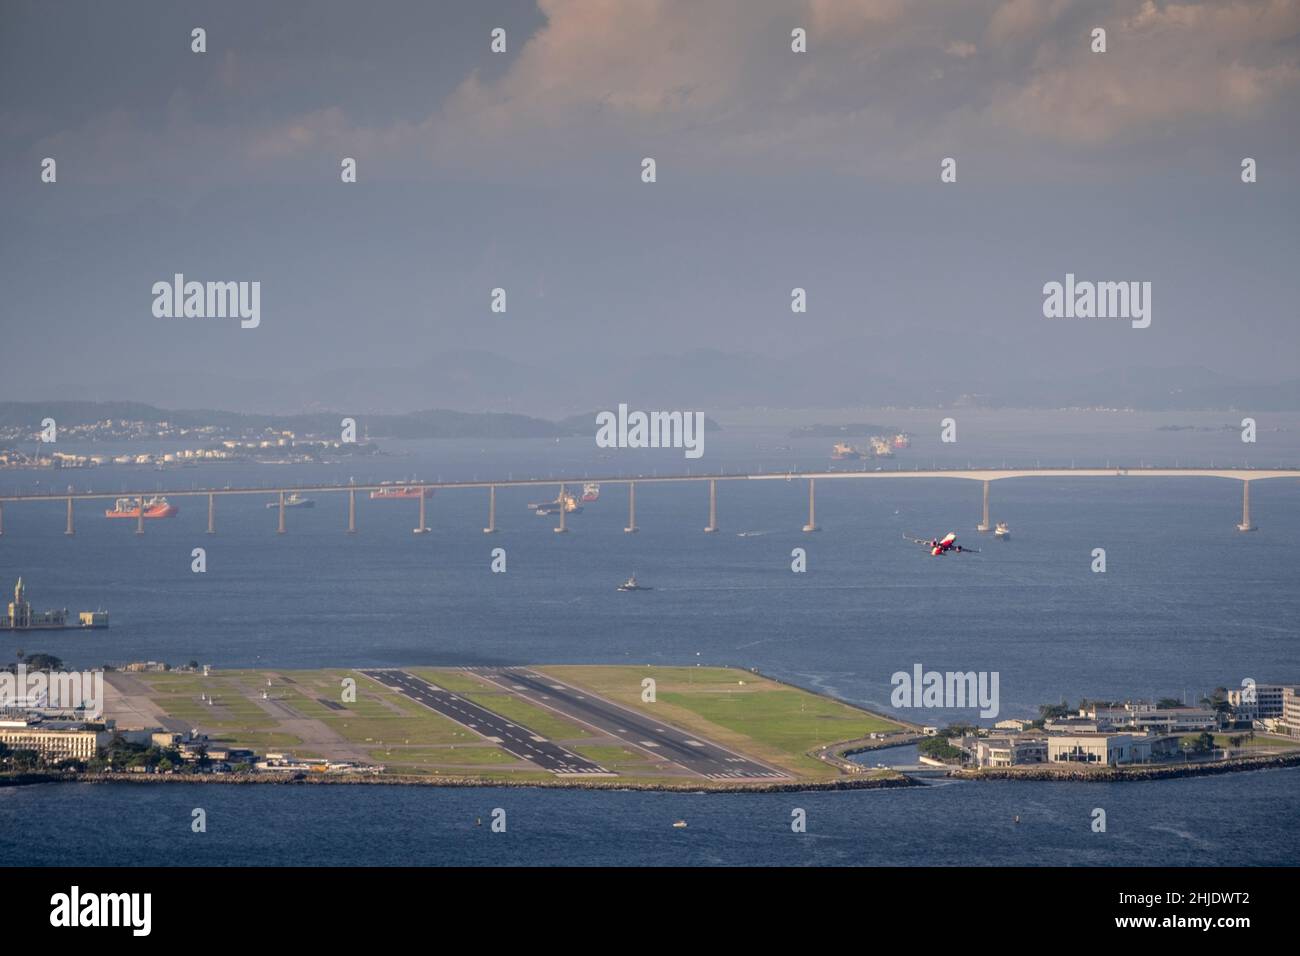 Brazil, Rio de Janeiro. Plane taking off from runway at Santos Dumont airport in city centre. Guanabara Bay & Rio-Niteroi bridge behind. Daytime. Stock Photo